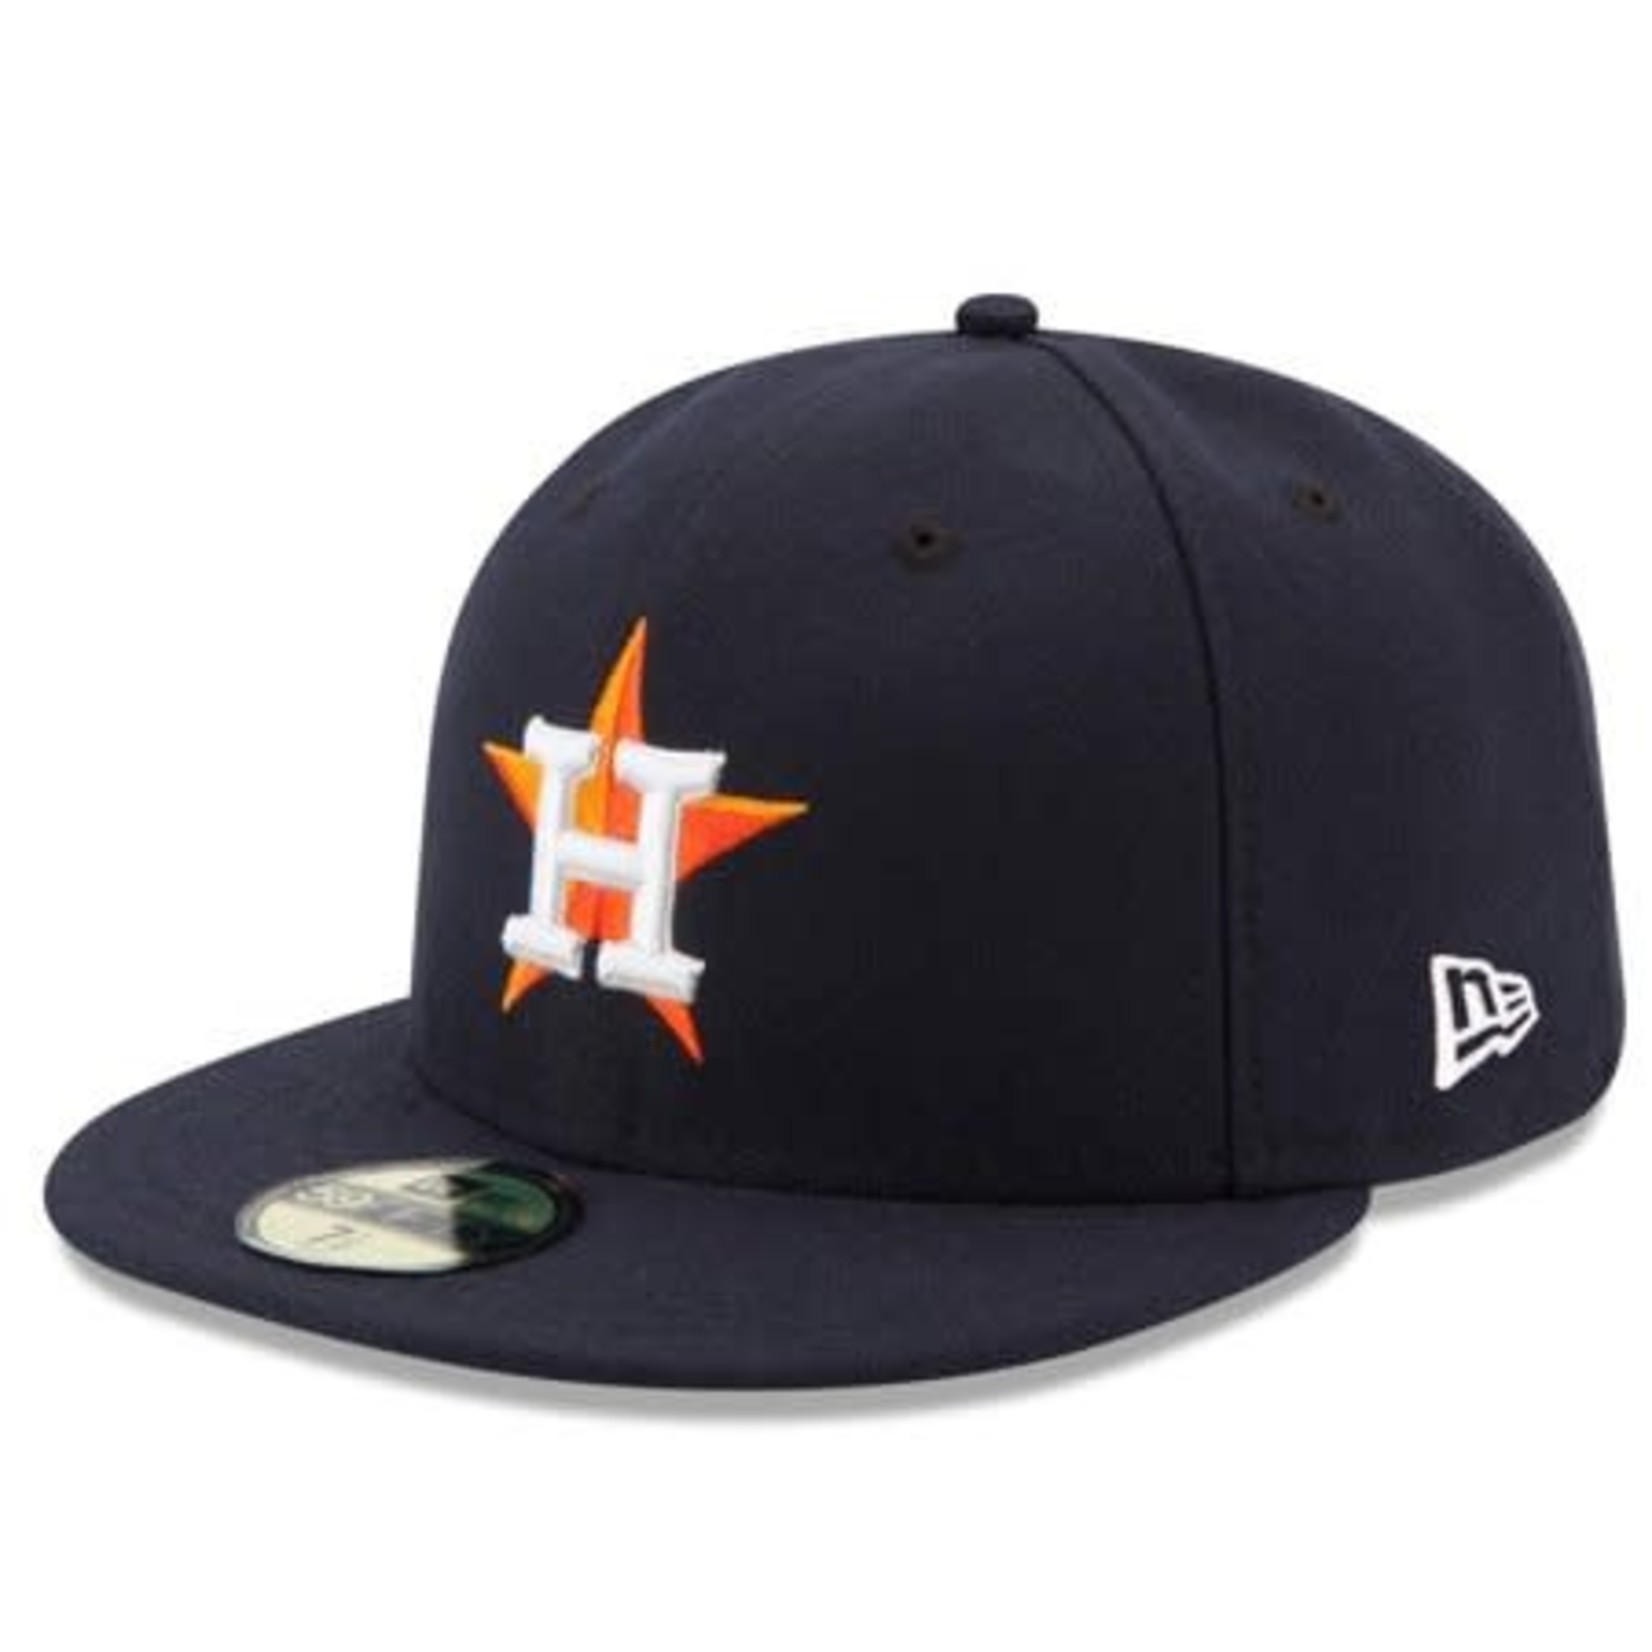 New Era New Era Houston Astros Authentic Collection 59FIFTY Cap